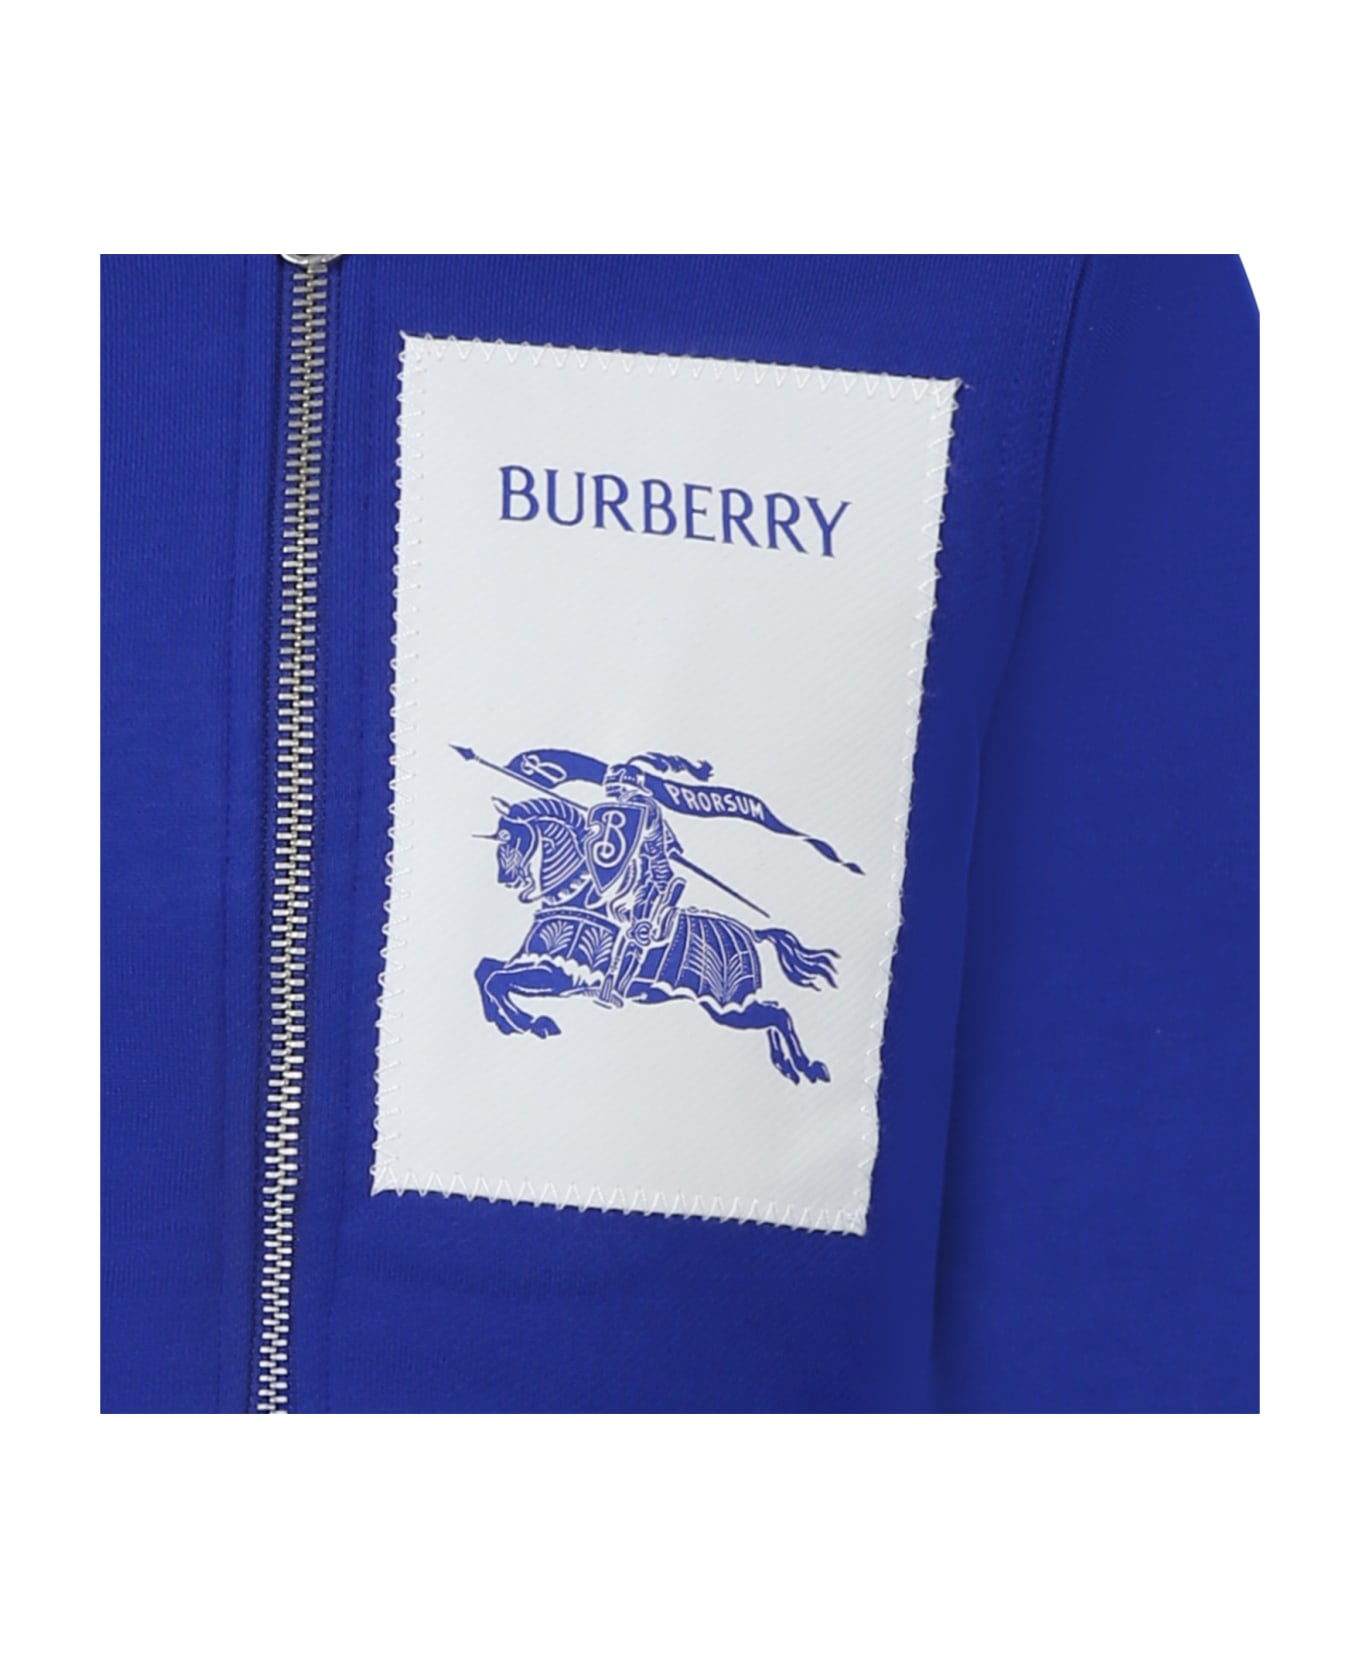 Burberry Sweatshirt For Boys With Logo - Blue